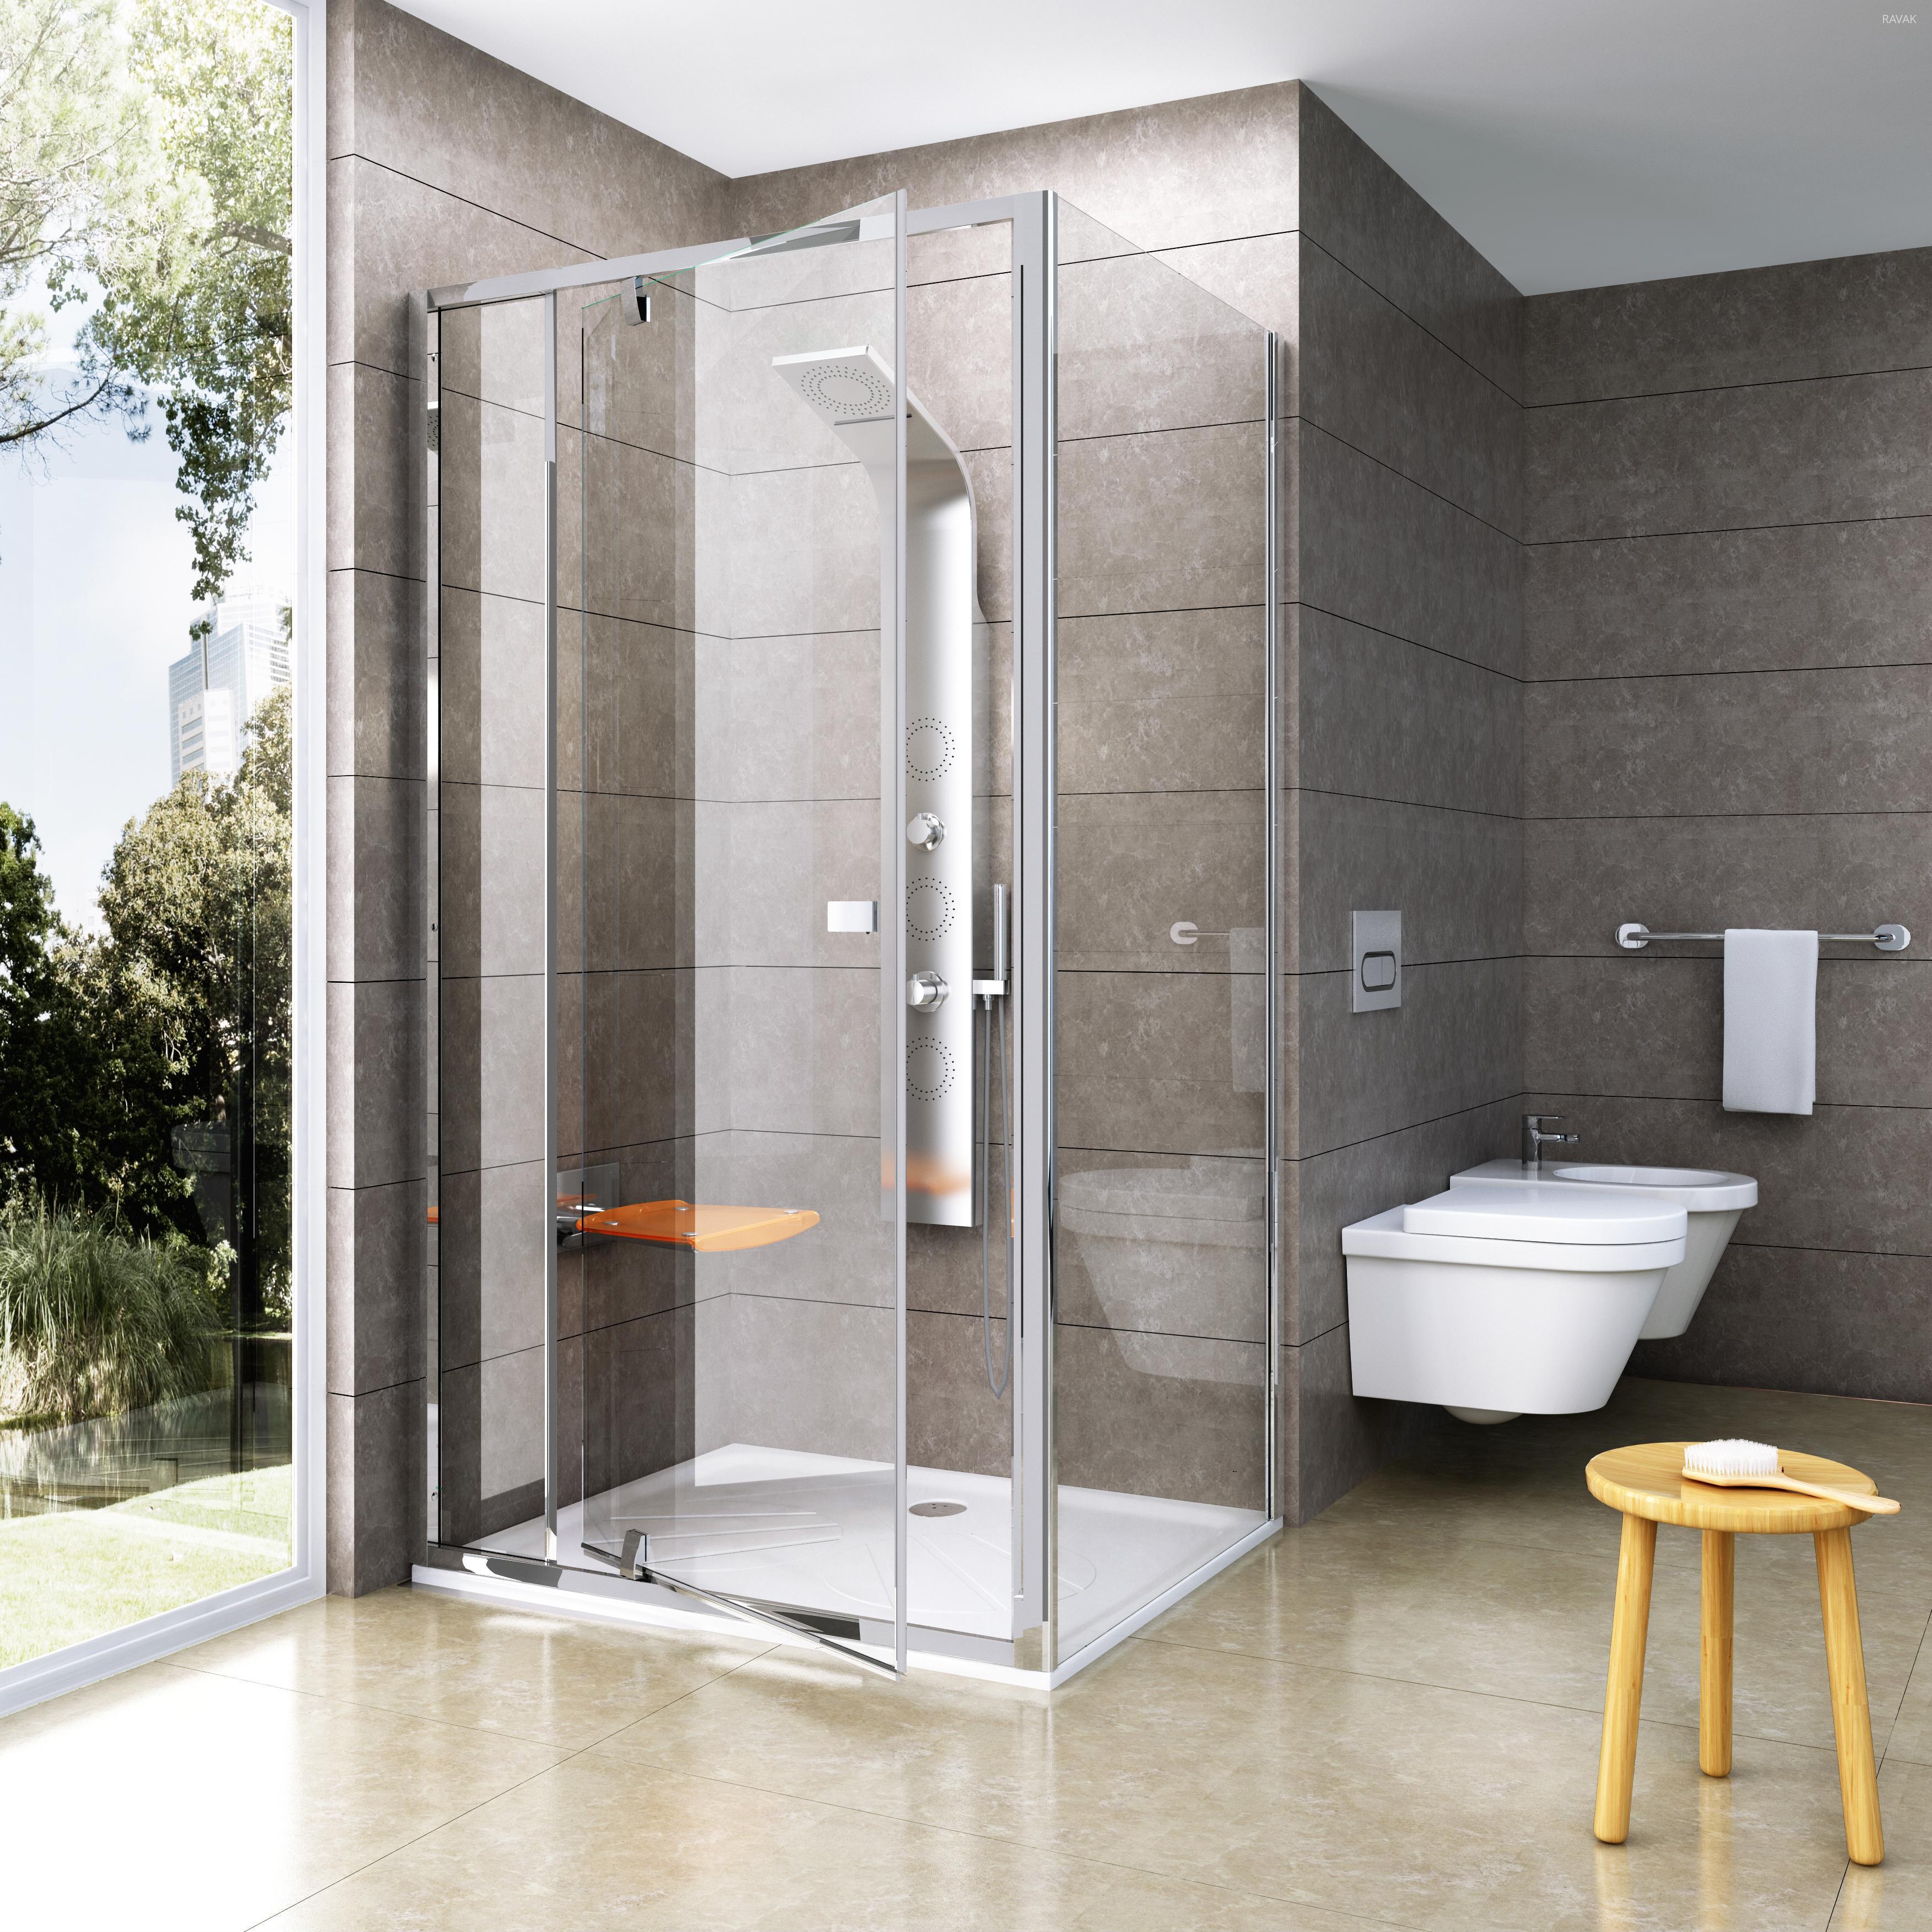 Sarok zuhanyfülke - fürdő / WC ötlet, modern stílusban